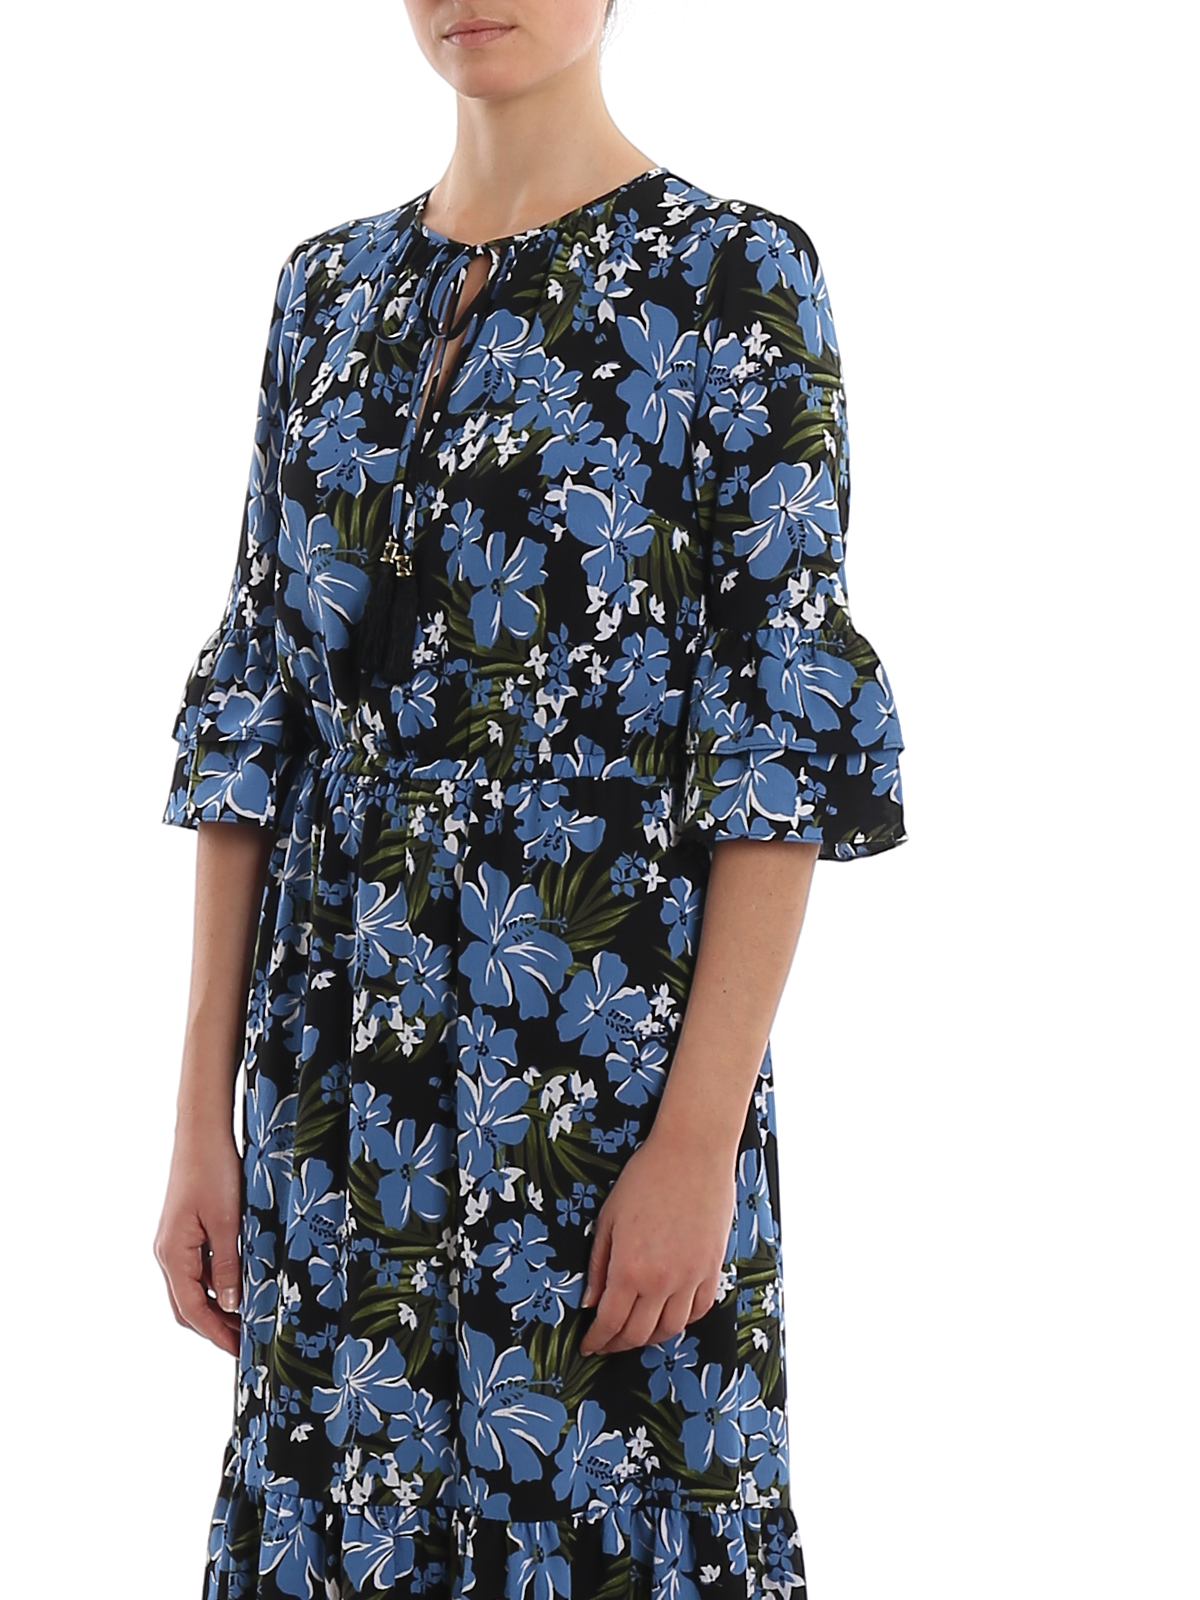 michael kors blue floral dress